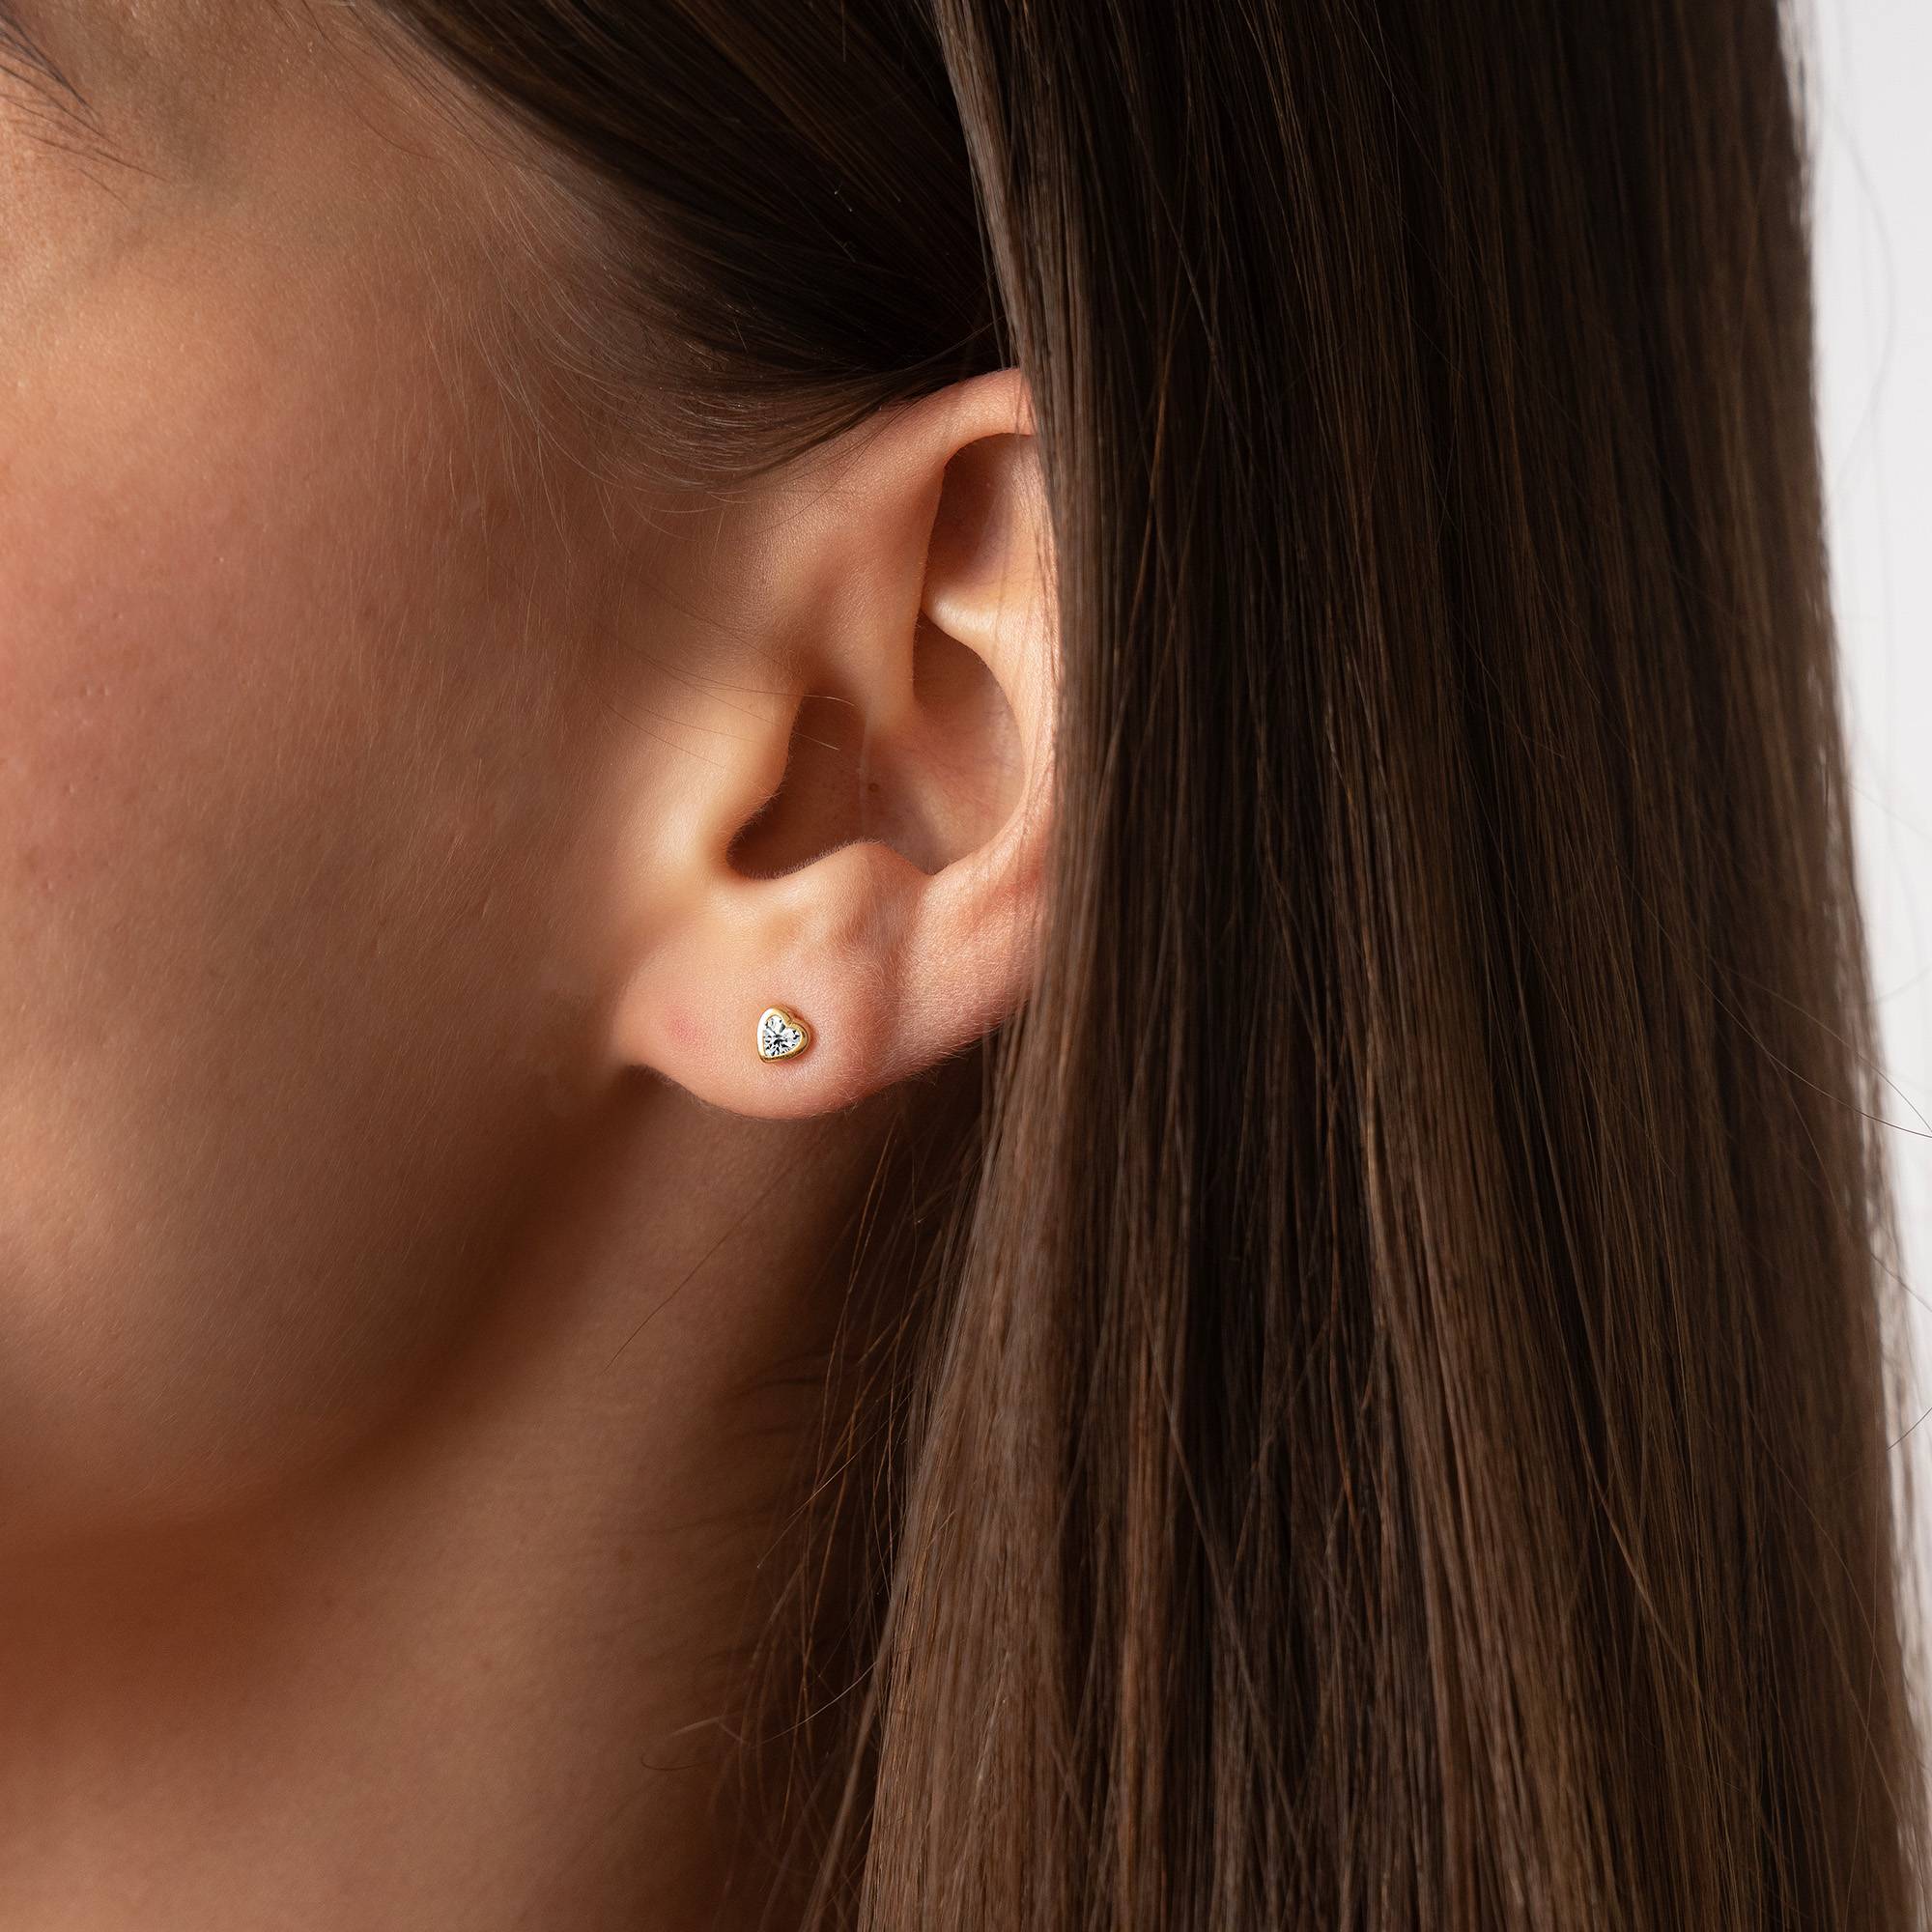 Charli Heart Earrings in 18K Gold Vermeil-2 product photo